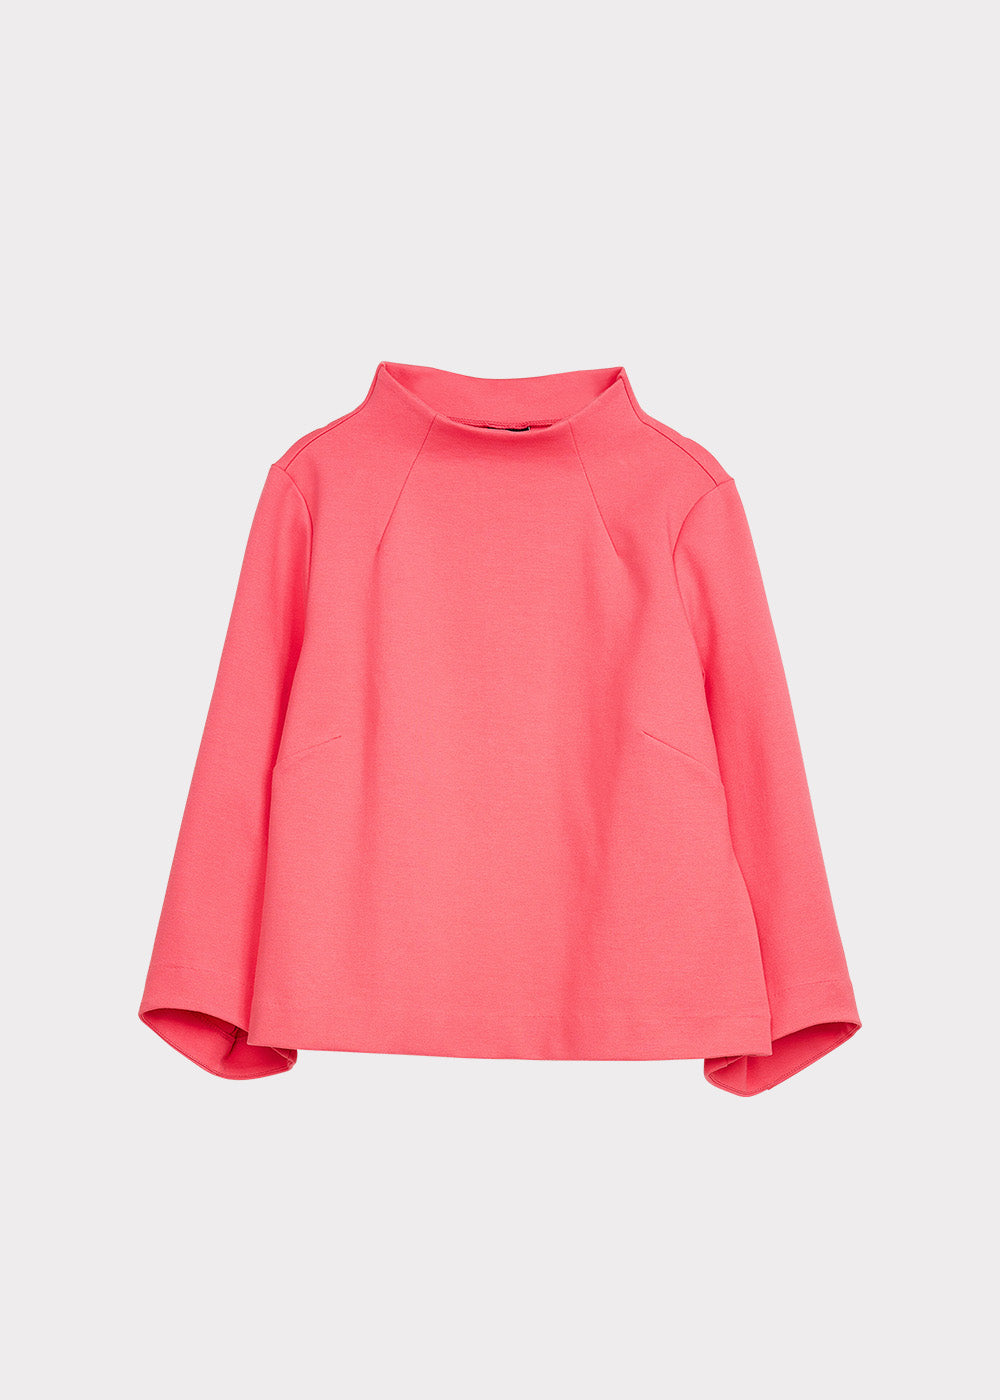 HEXACON-paita, Coral Red, naisten